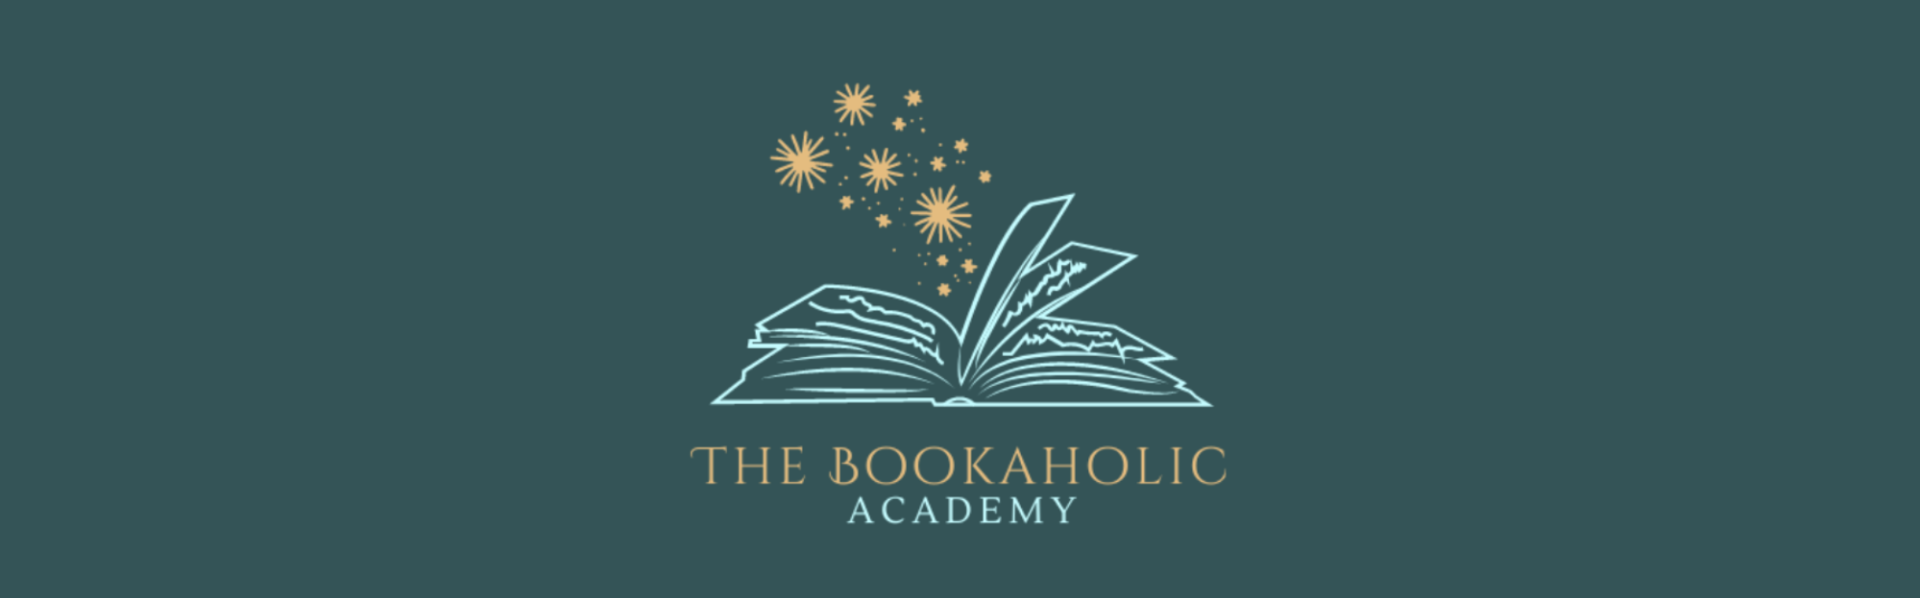 The Bookaholic Academy